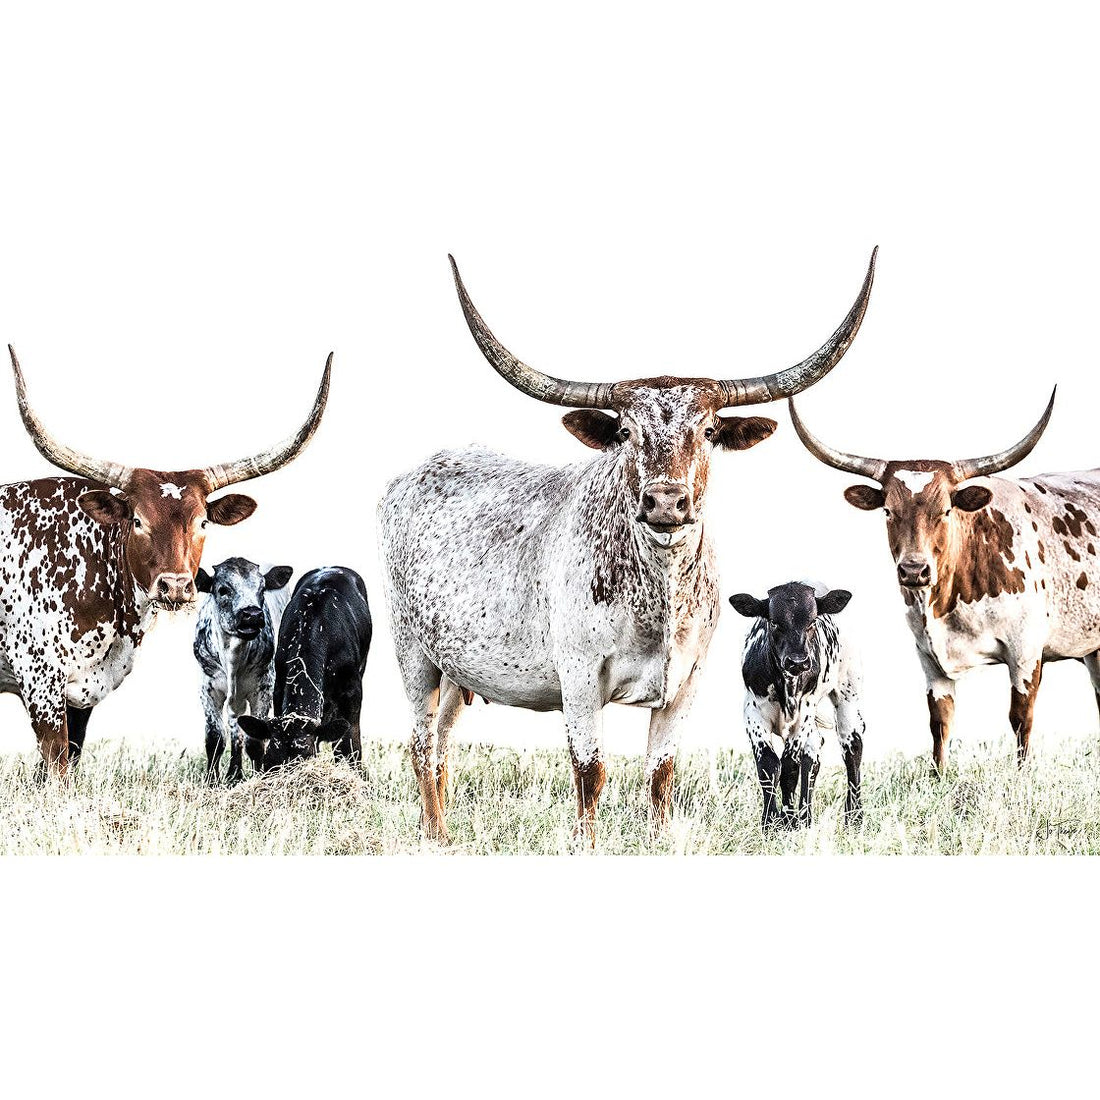 Sold ‘Kilbeggan Cows &amp; Calves’ 58x36 AVAILABLE TO ORDER